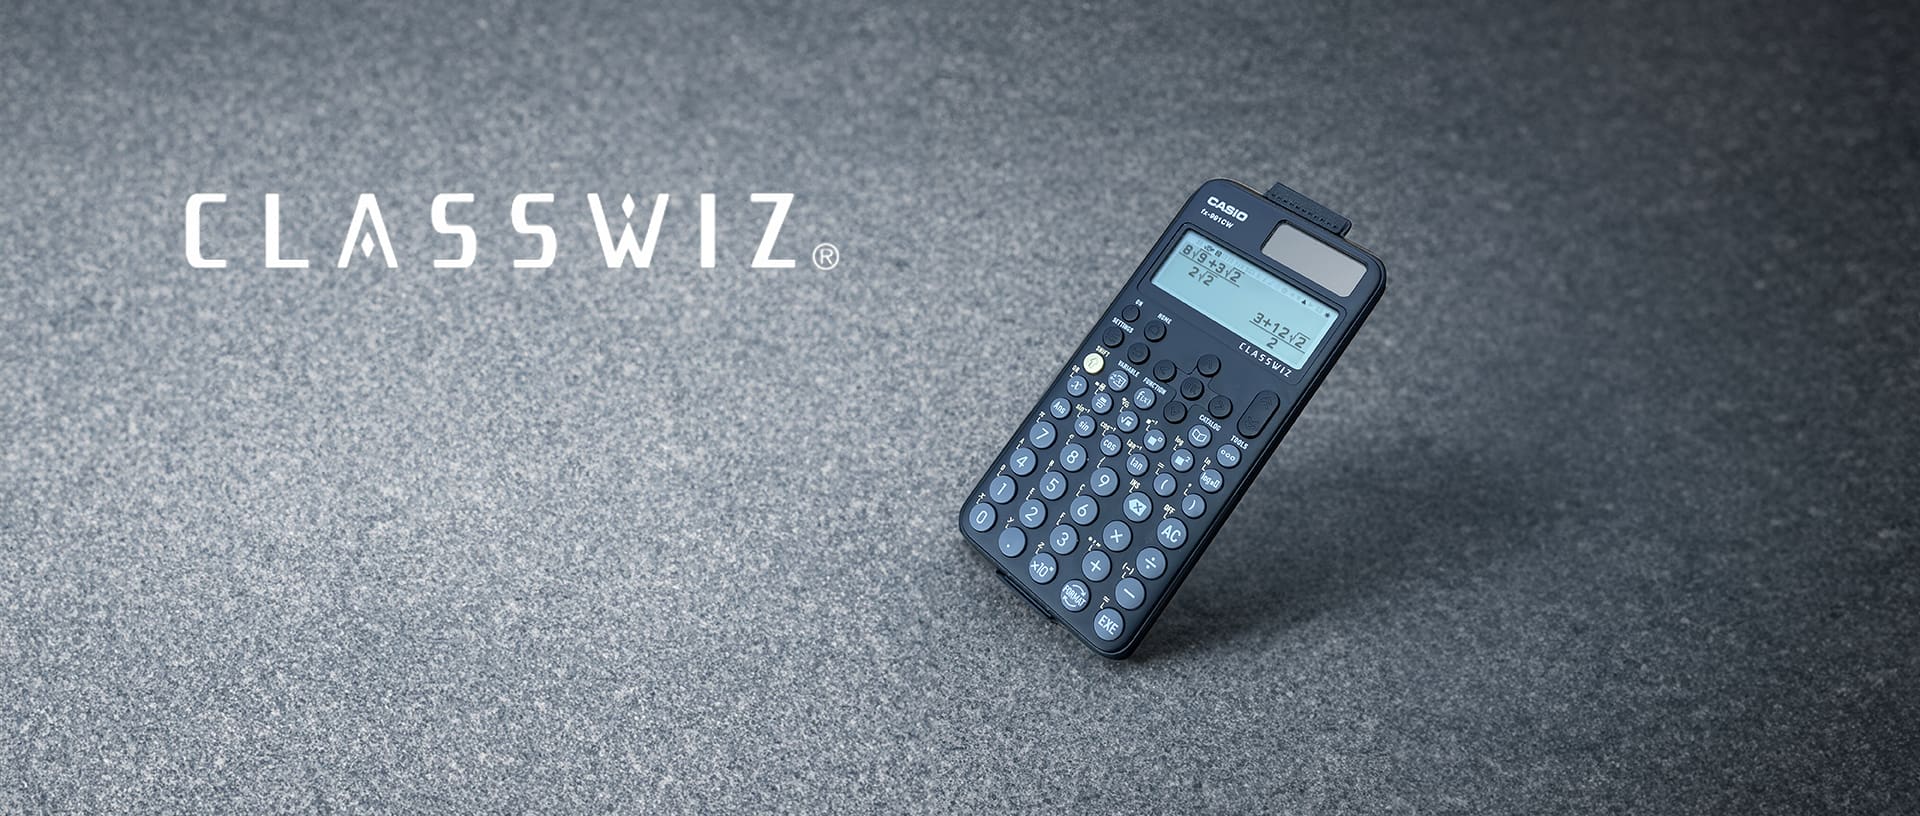 Casio fx-991CW ClassWiz Calculator